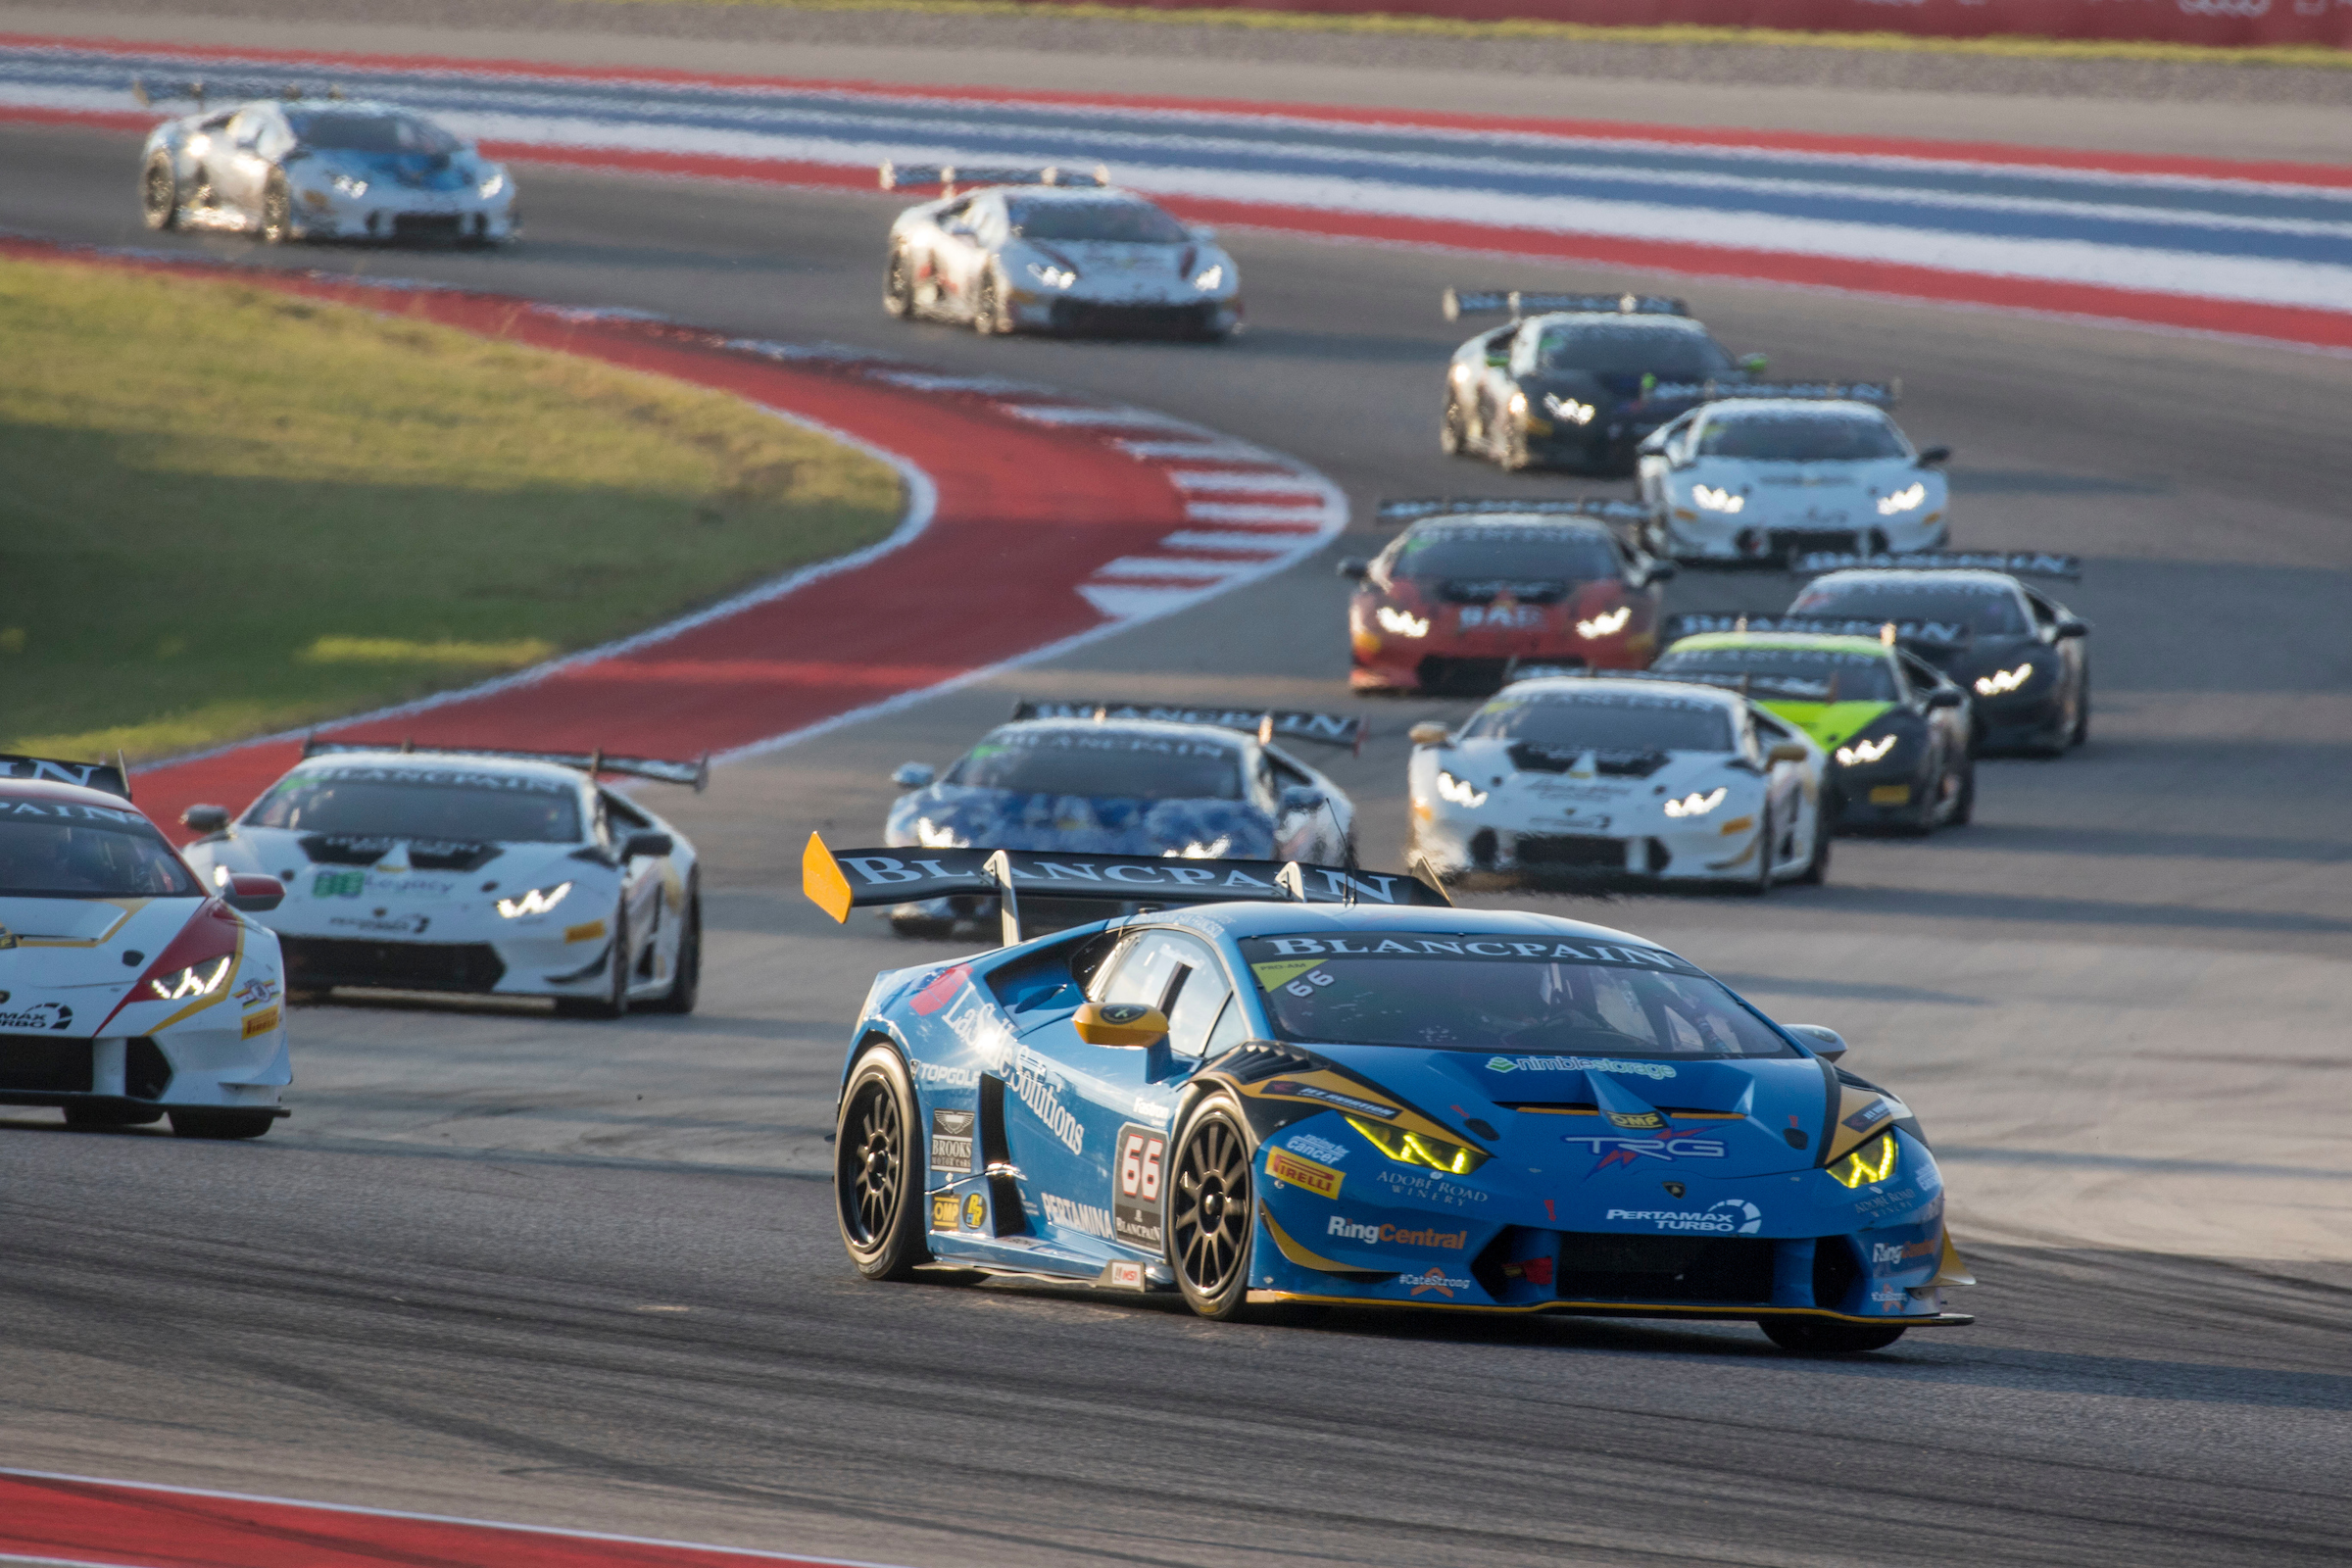 TRG Competing in Austin IMSA Race Weekend with Aston Martin, Lamborghini Entries